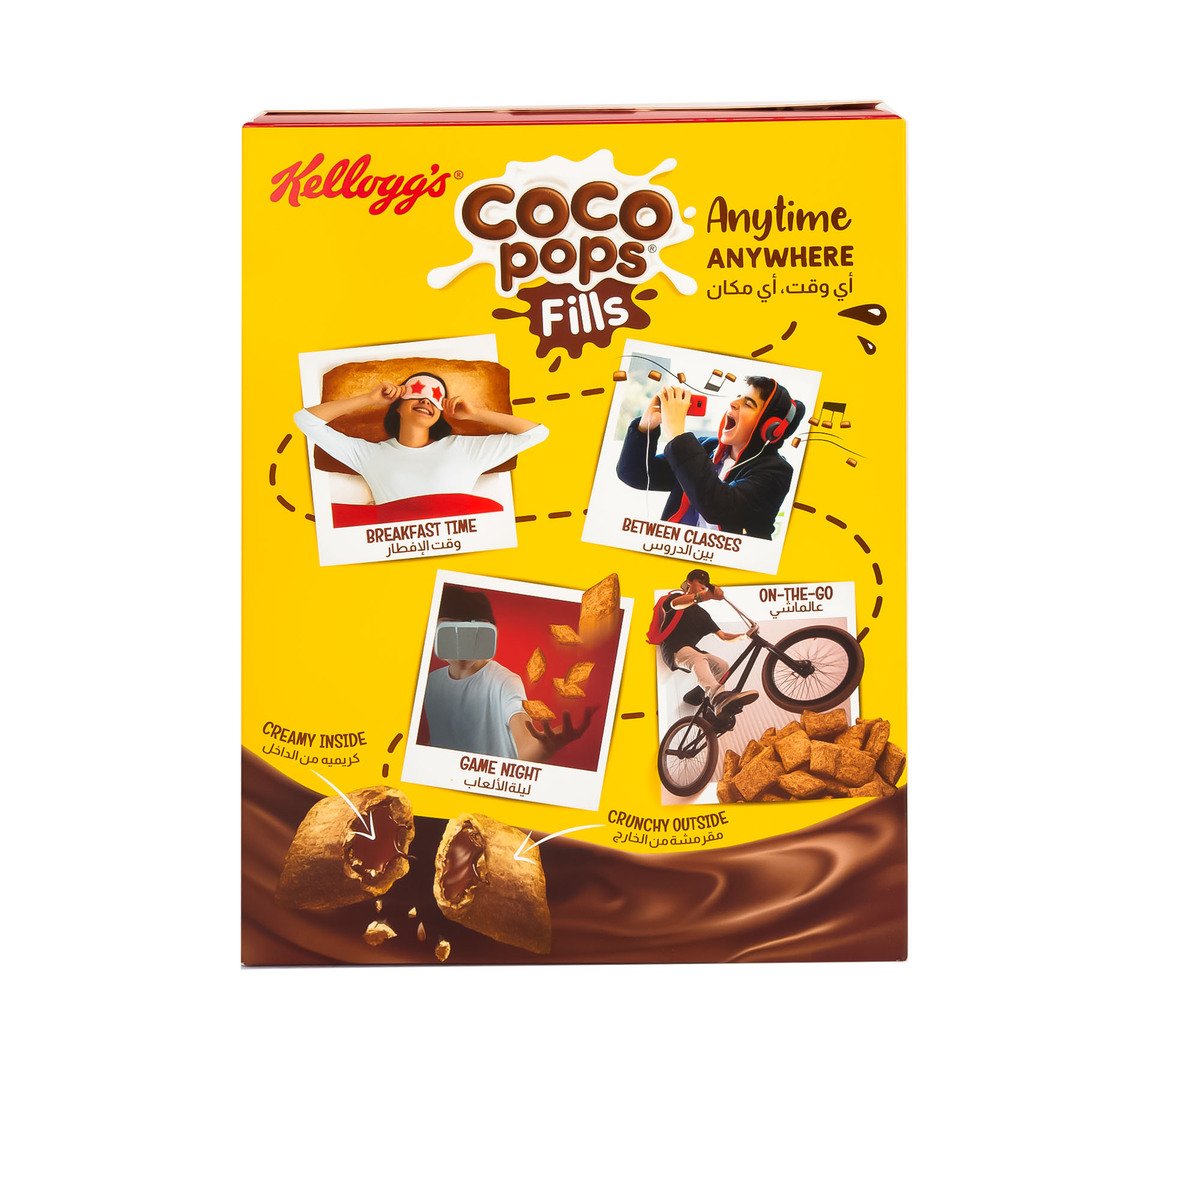 Kellogg's Coco Pops Fills 350 g